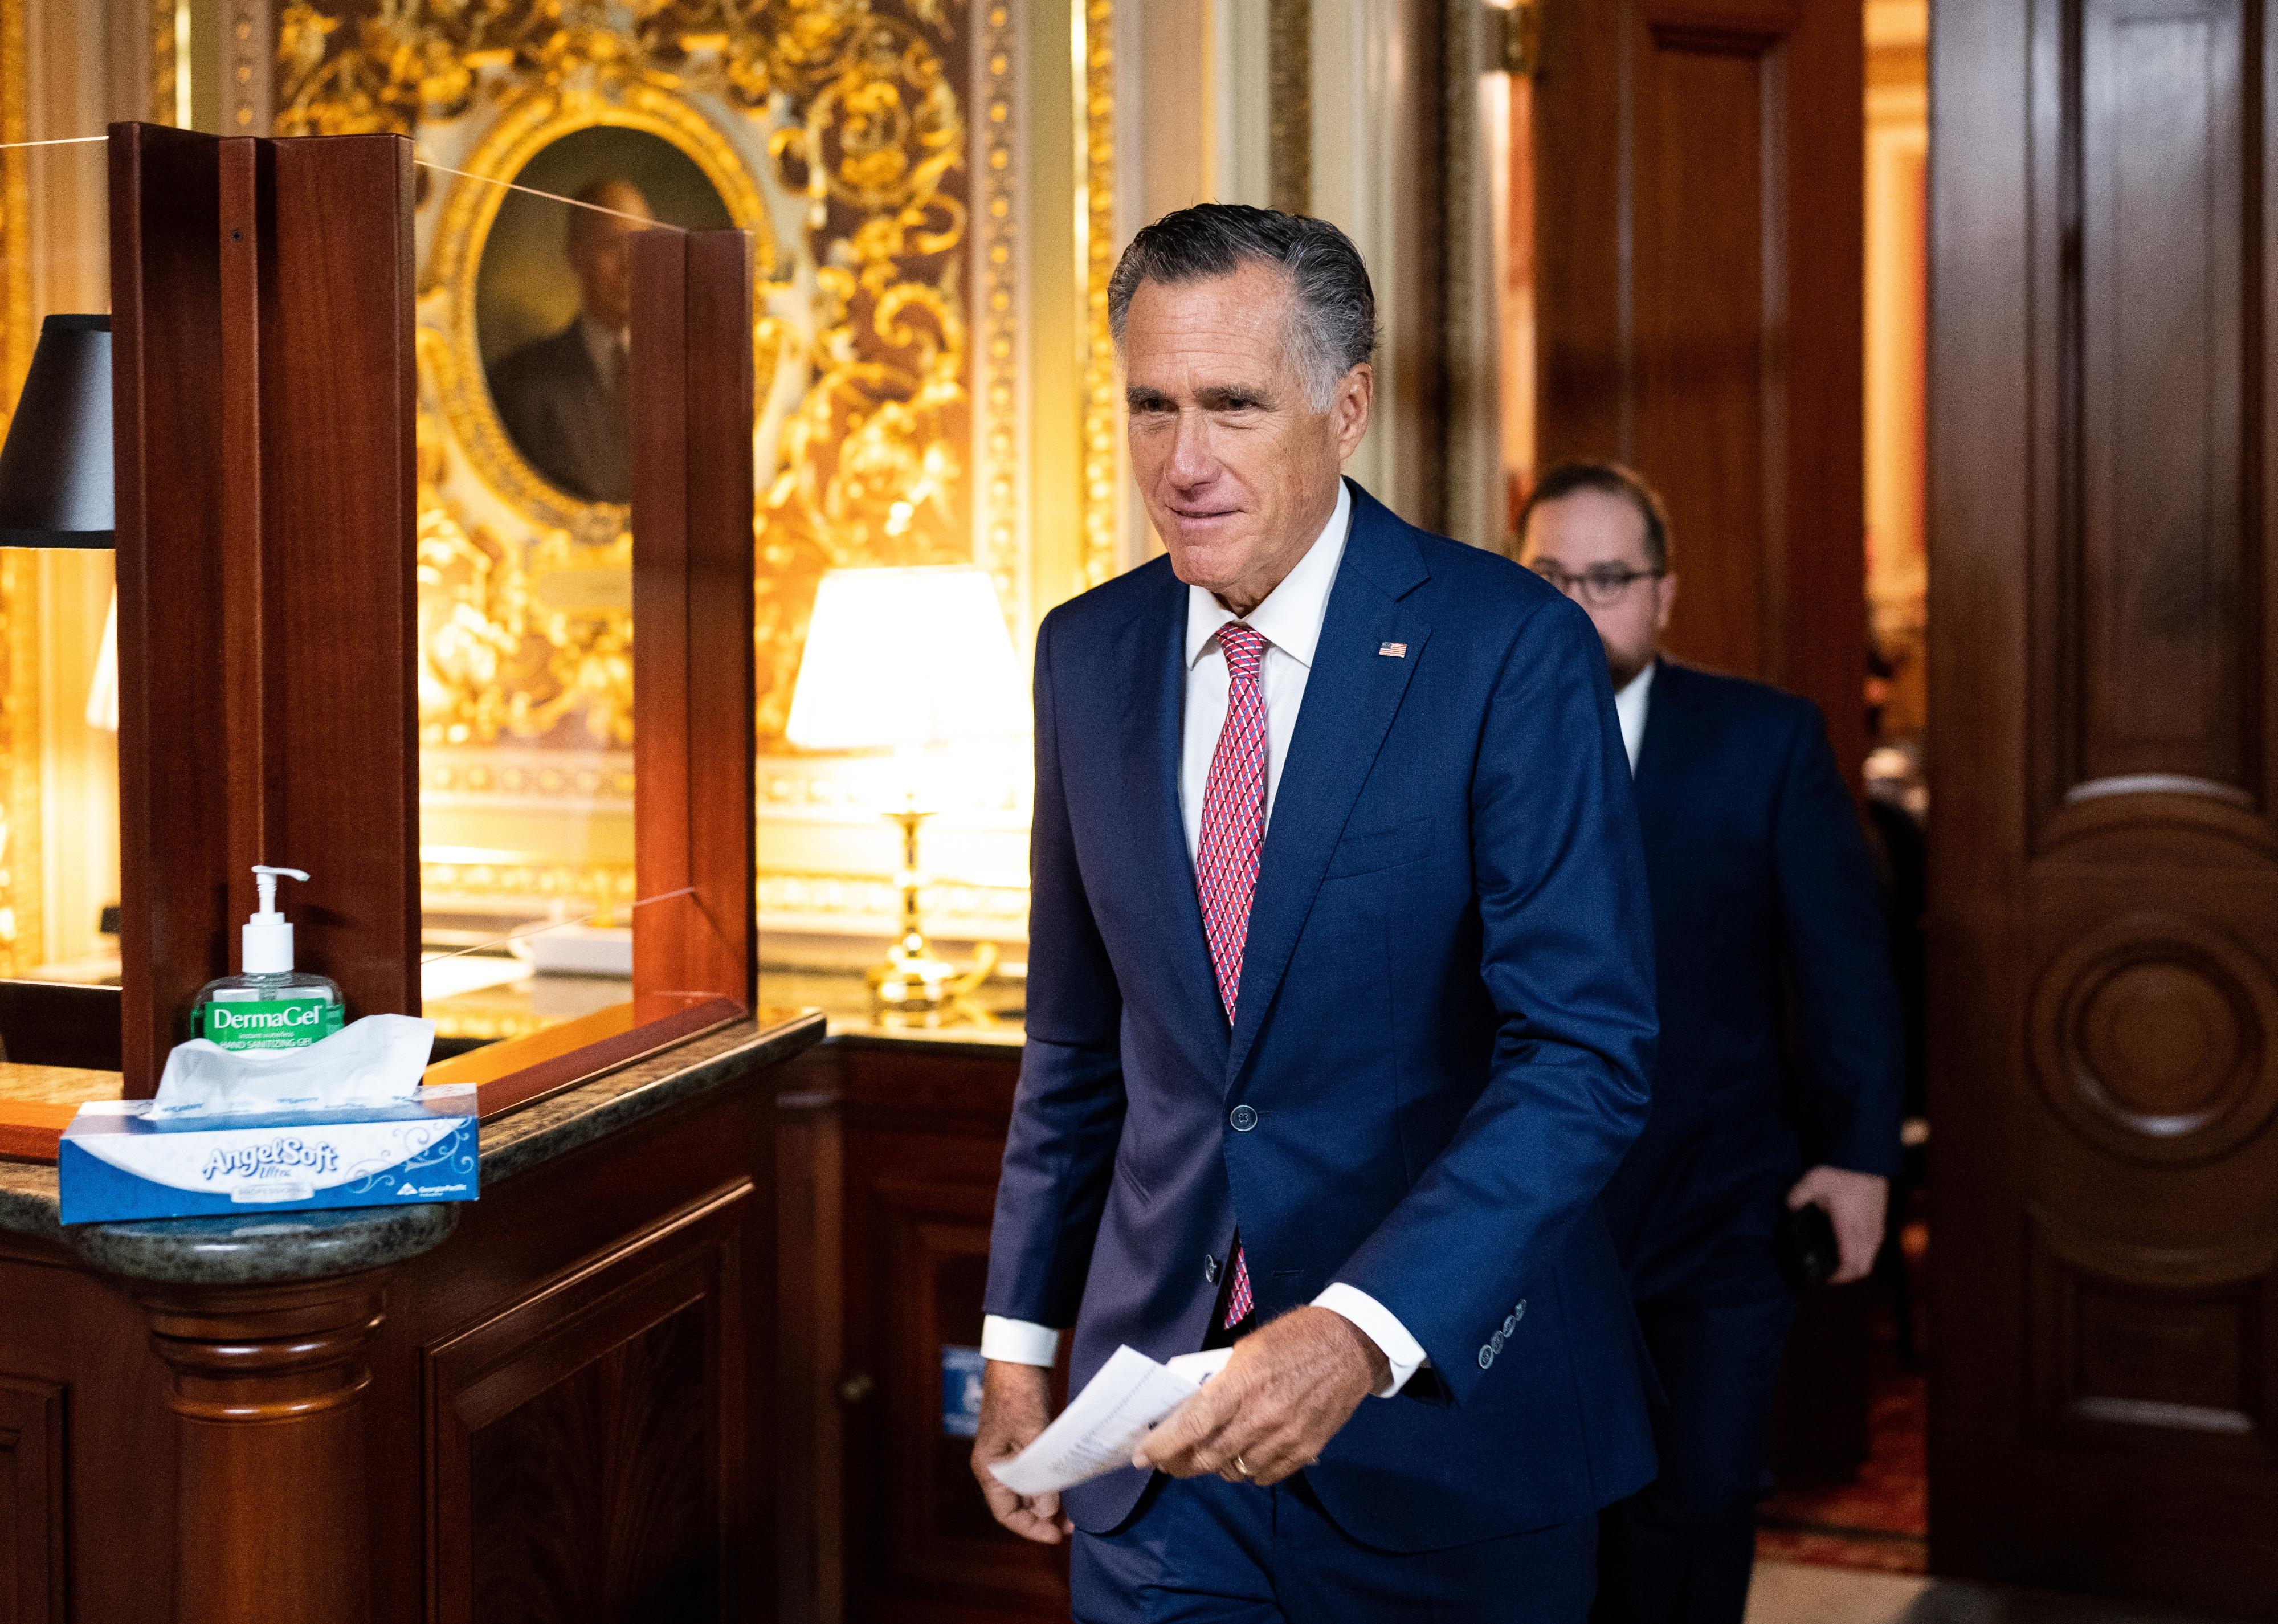 Mitt Romney in a blue suit walking through the U.S. Capitol.